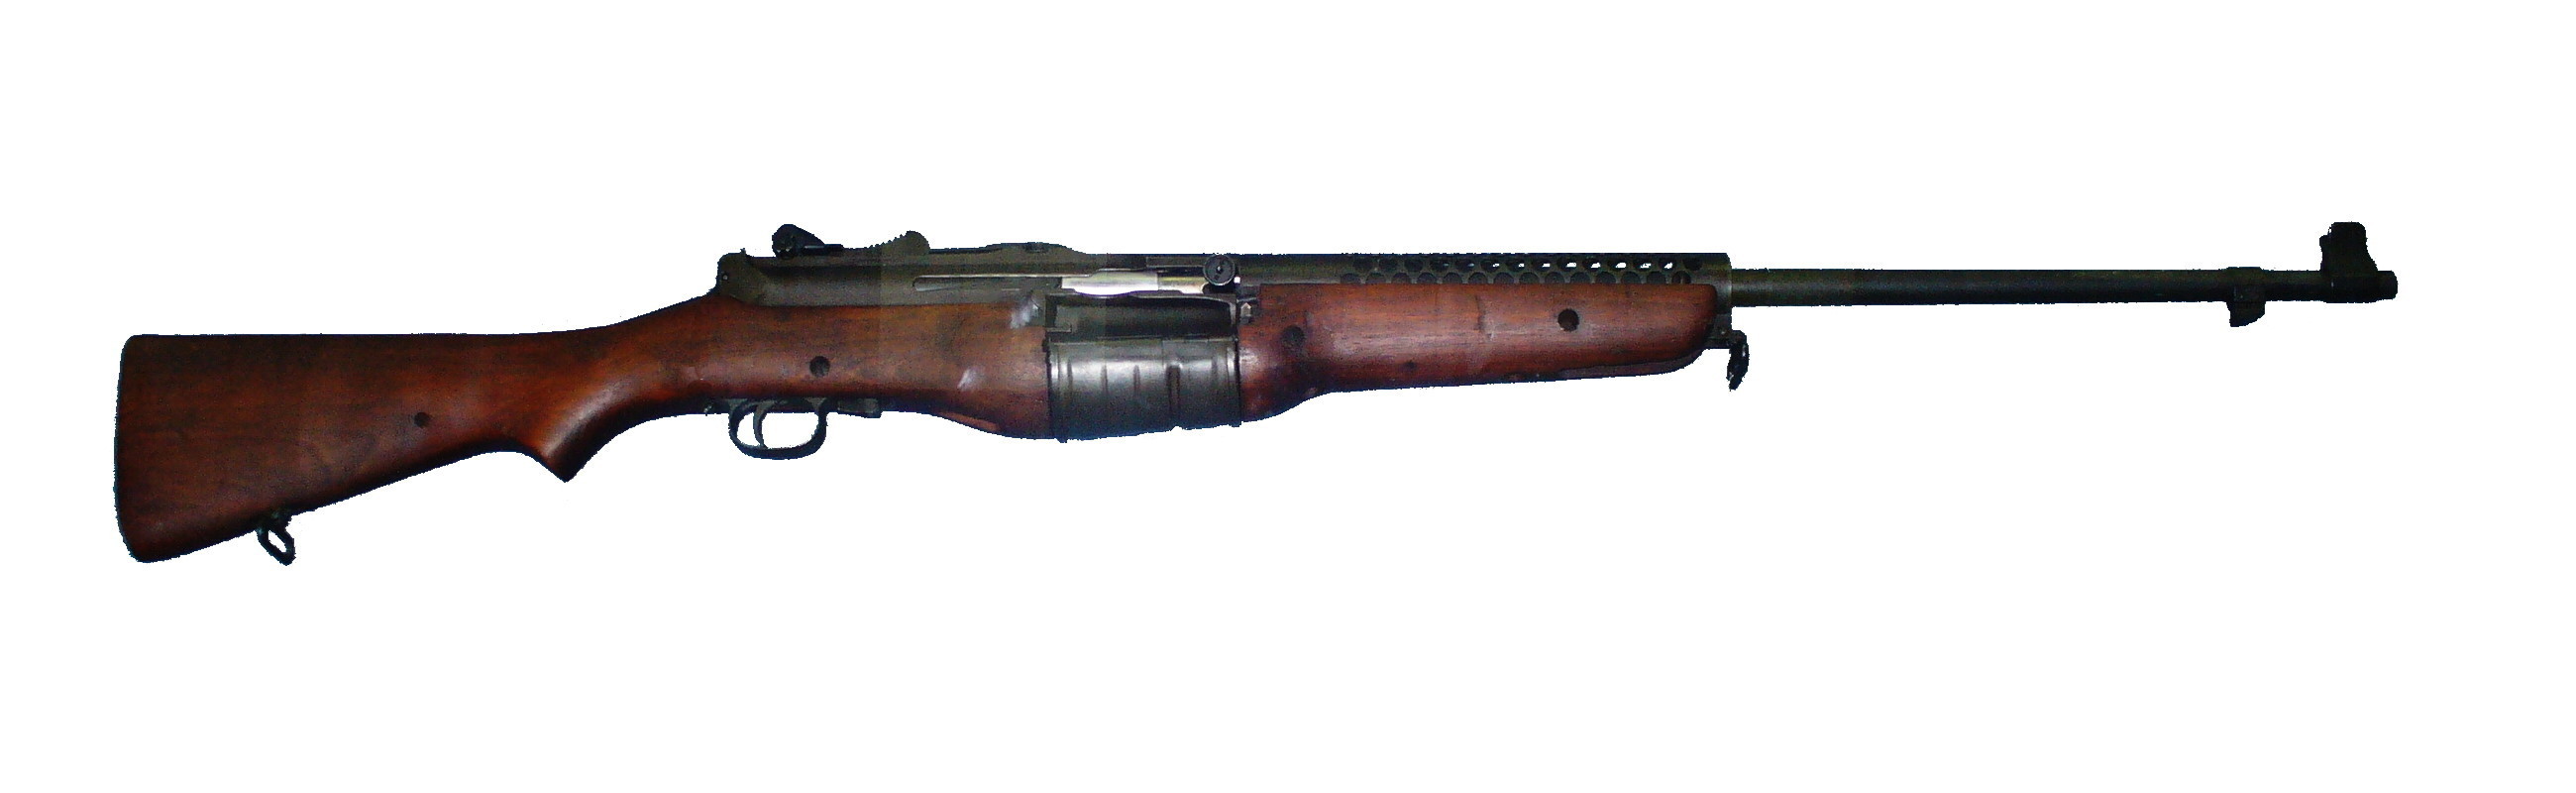 Johnson_M1941_Rifle.JPG